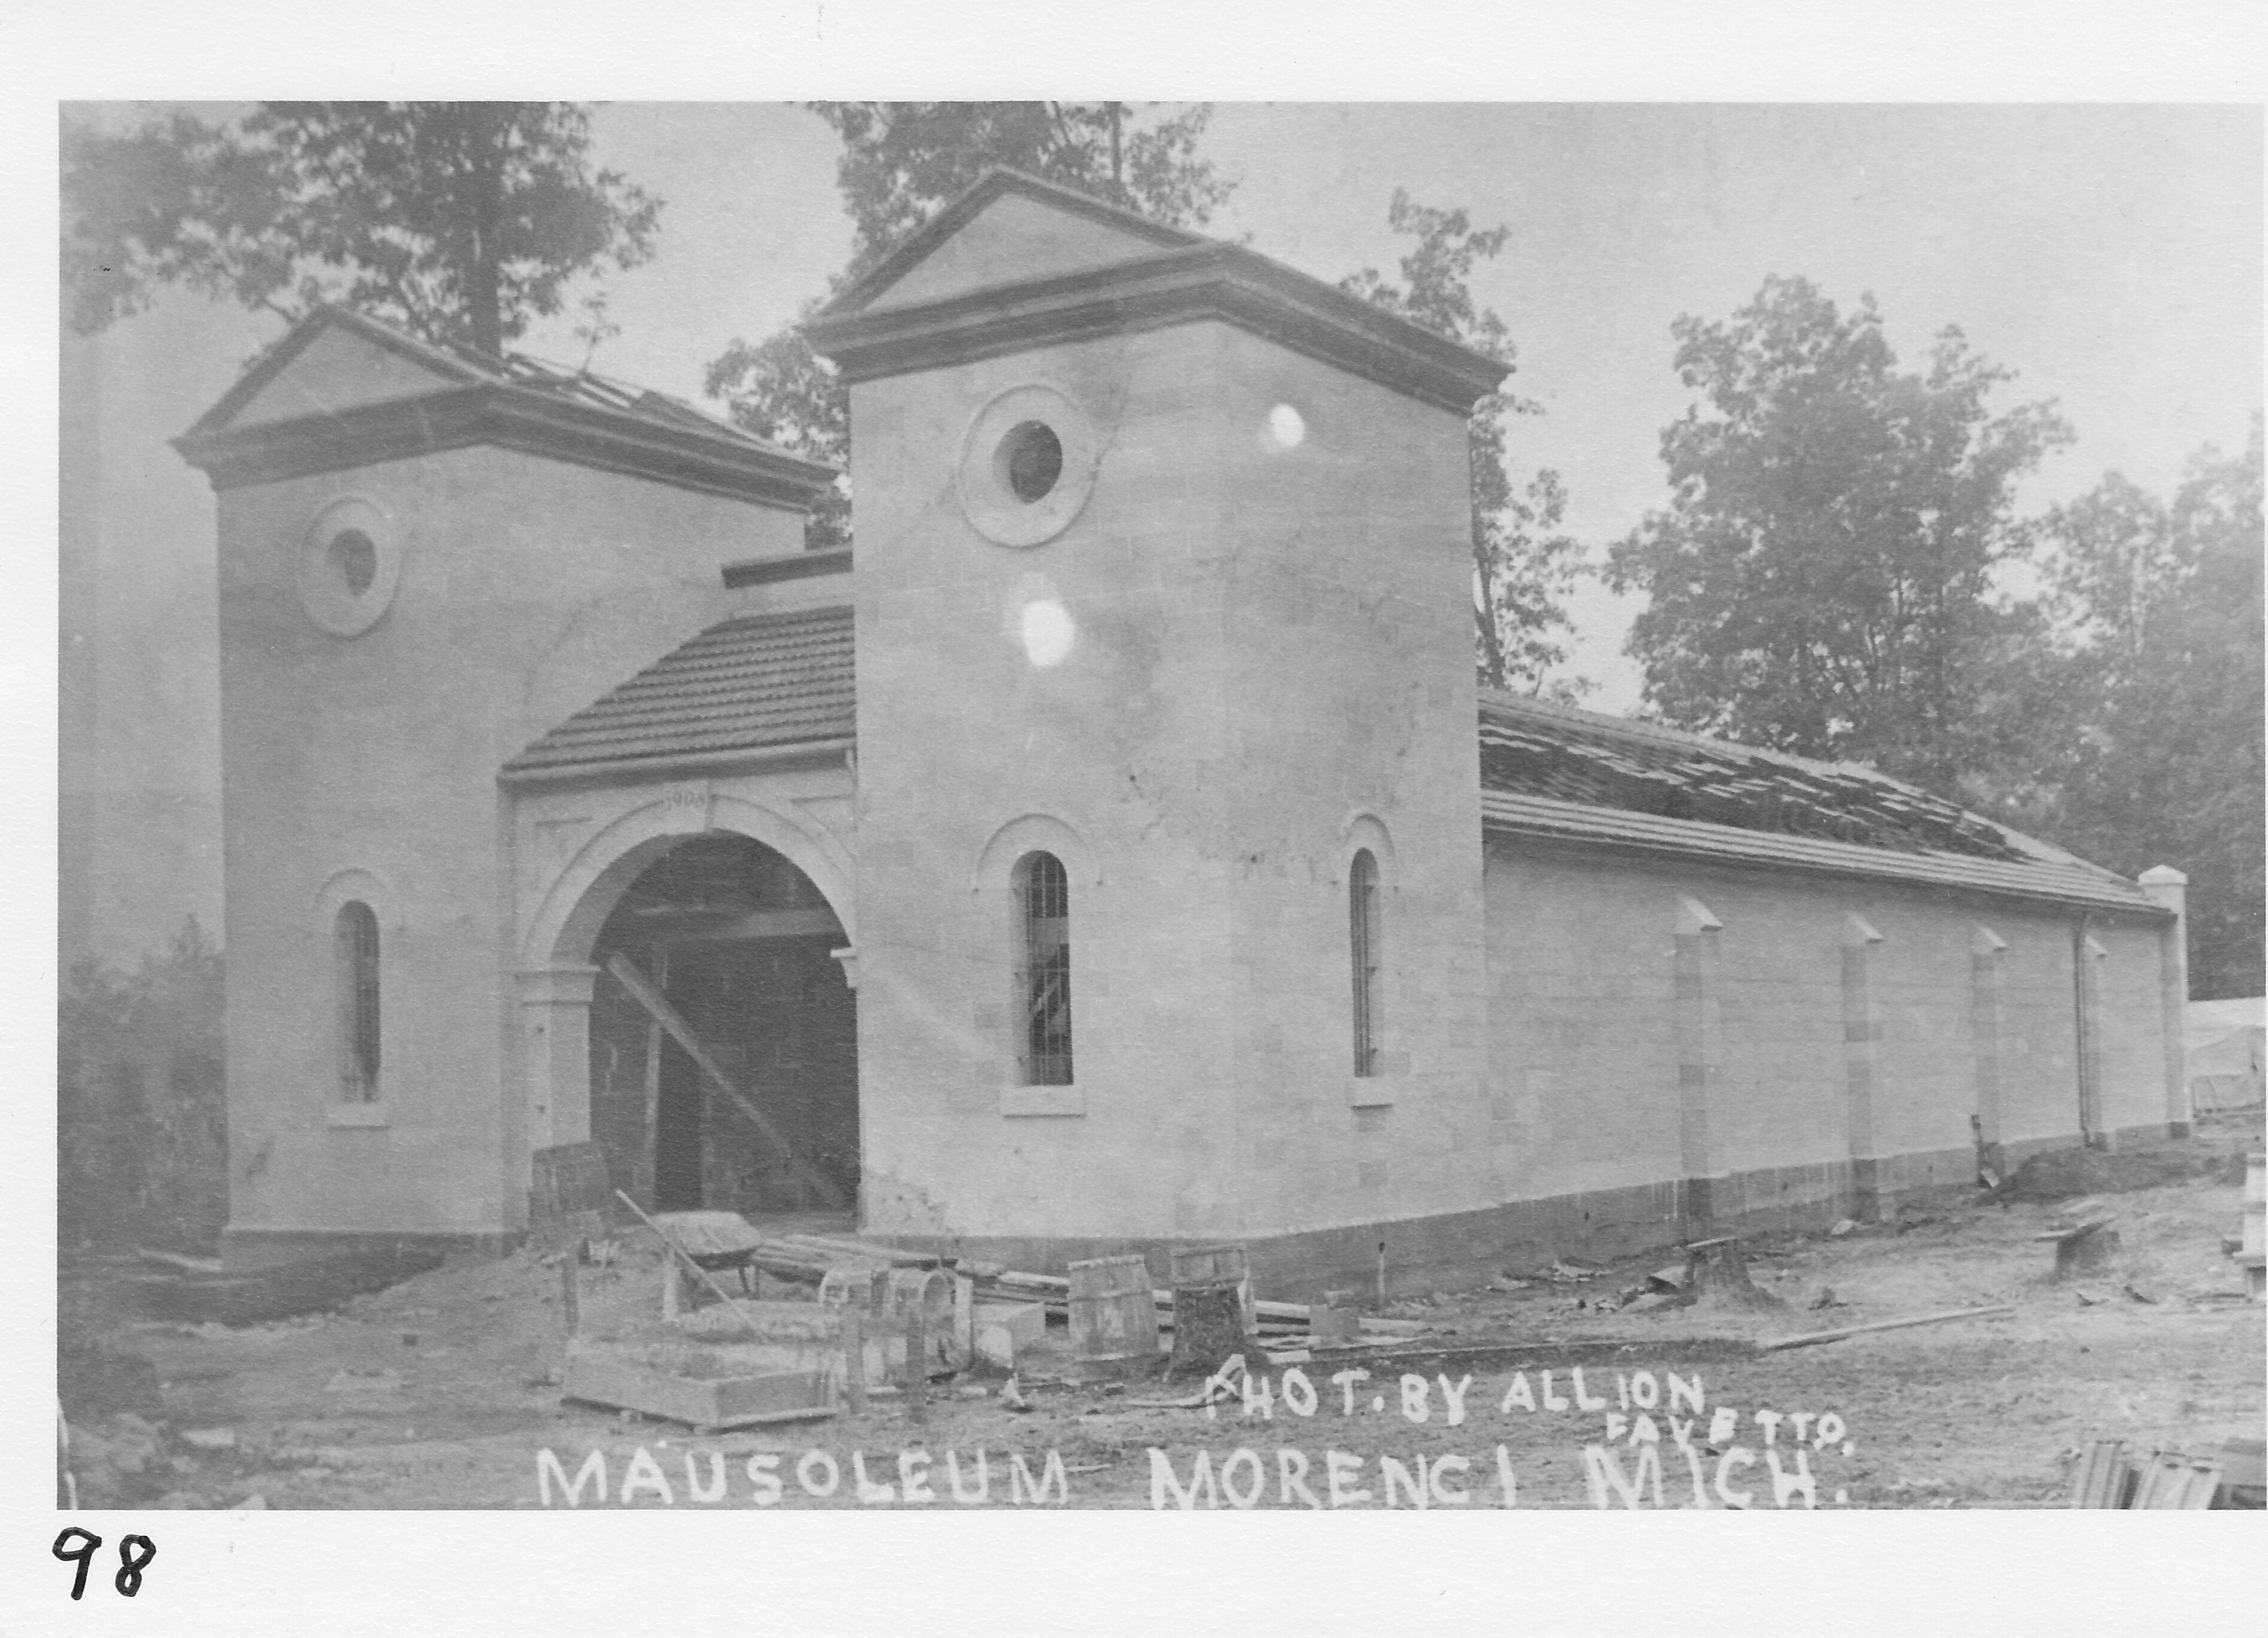 Oak Grove Mausoleum under construction 1908.  Razed in 1952.